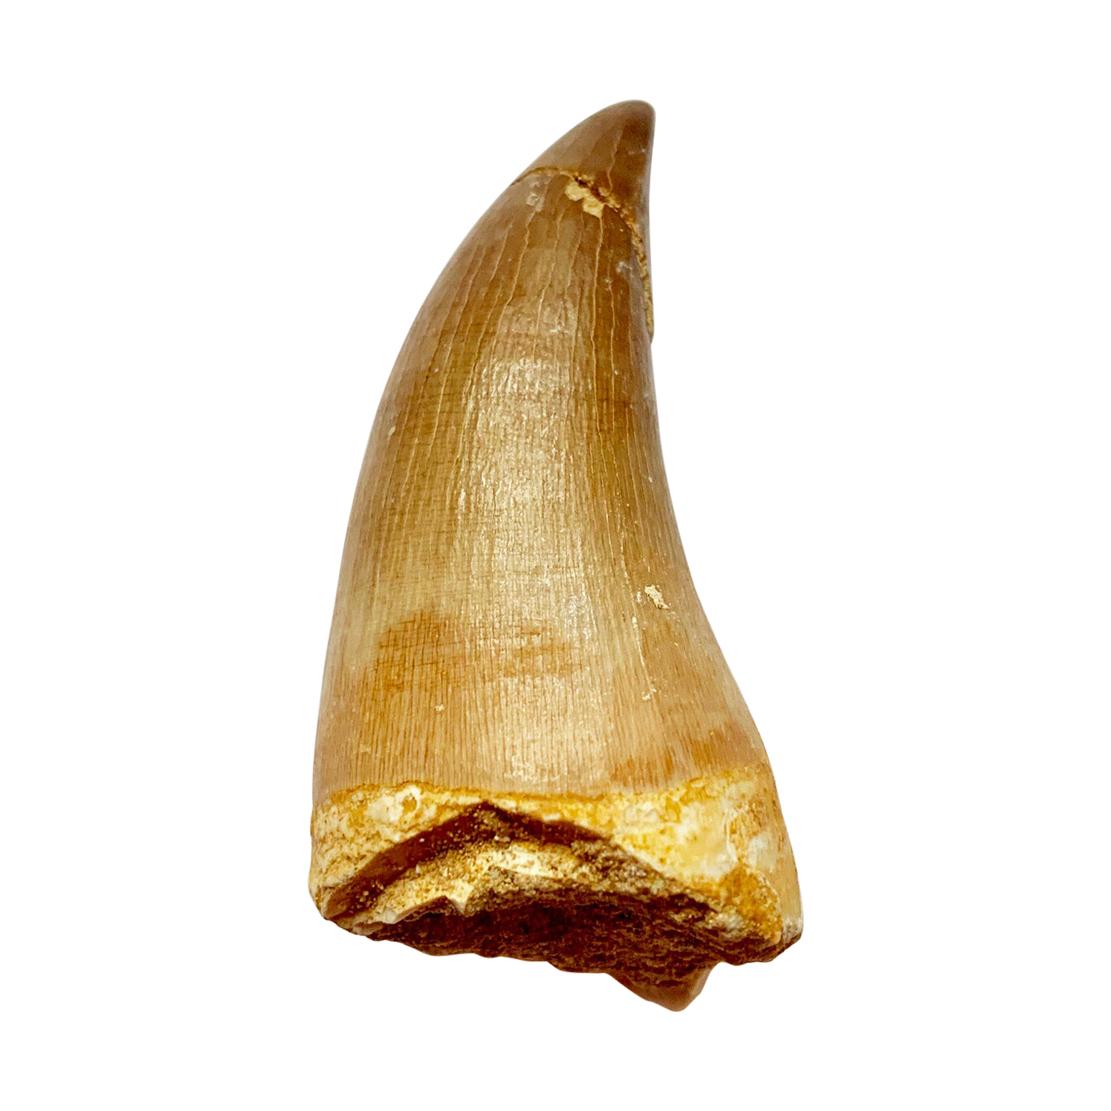 Fossilised Tooth of a Mosasaur Dinosaur